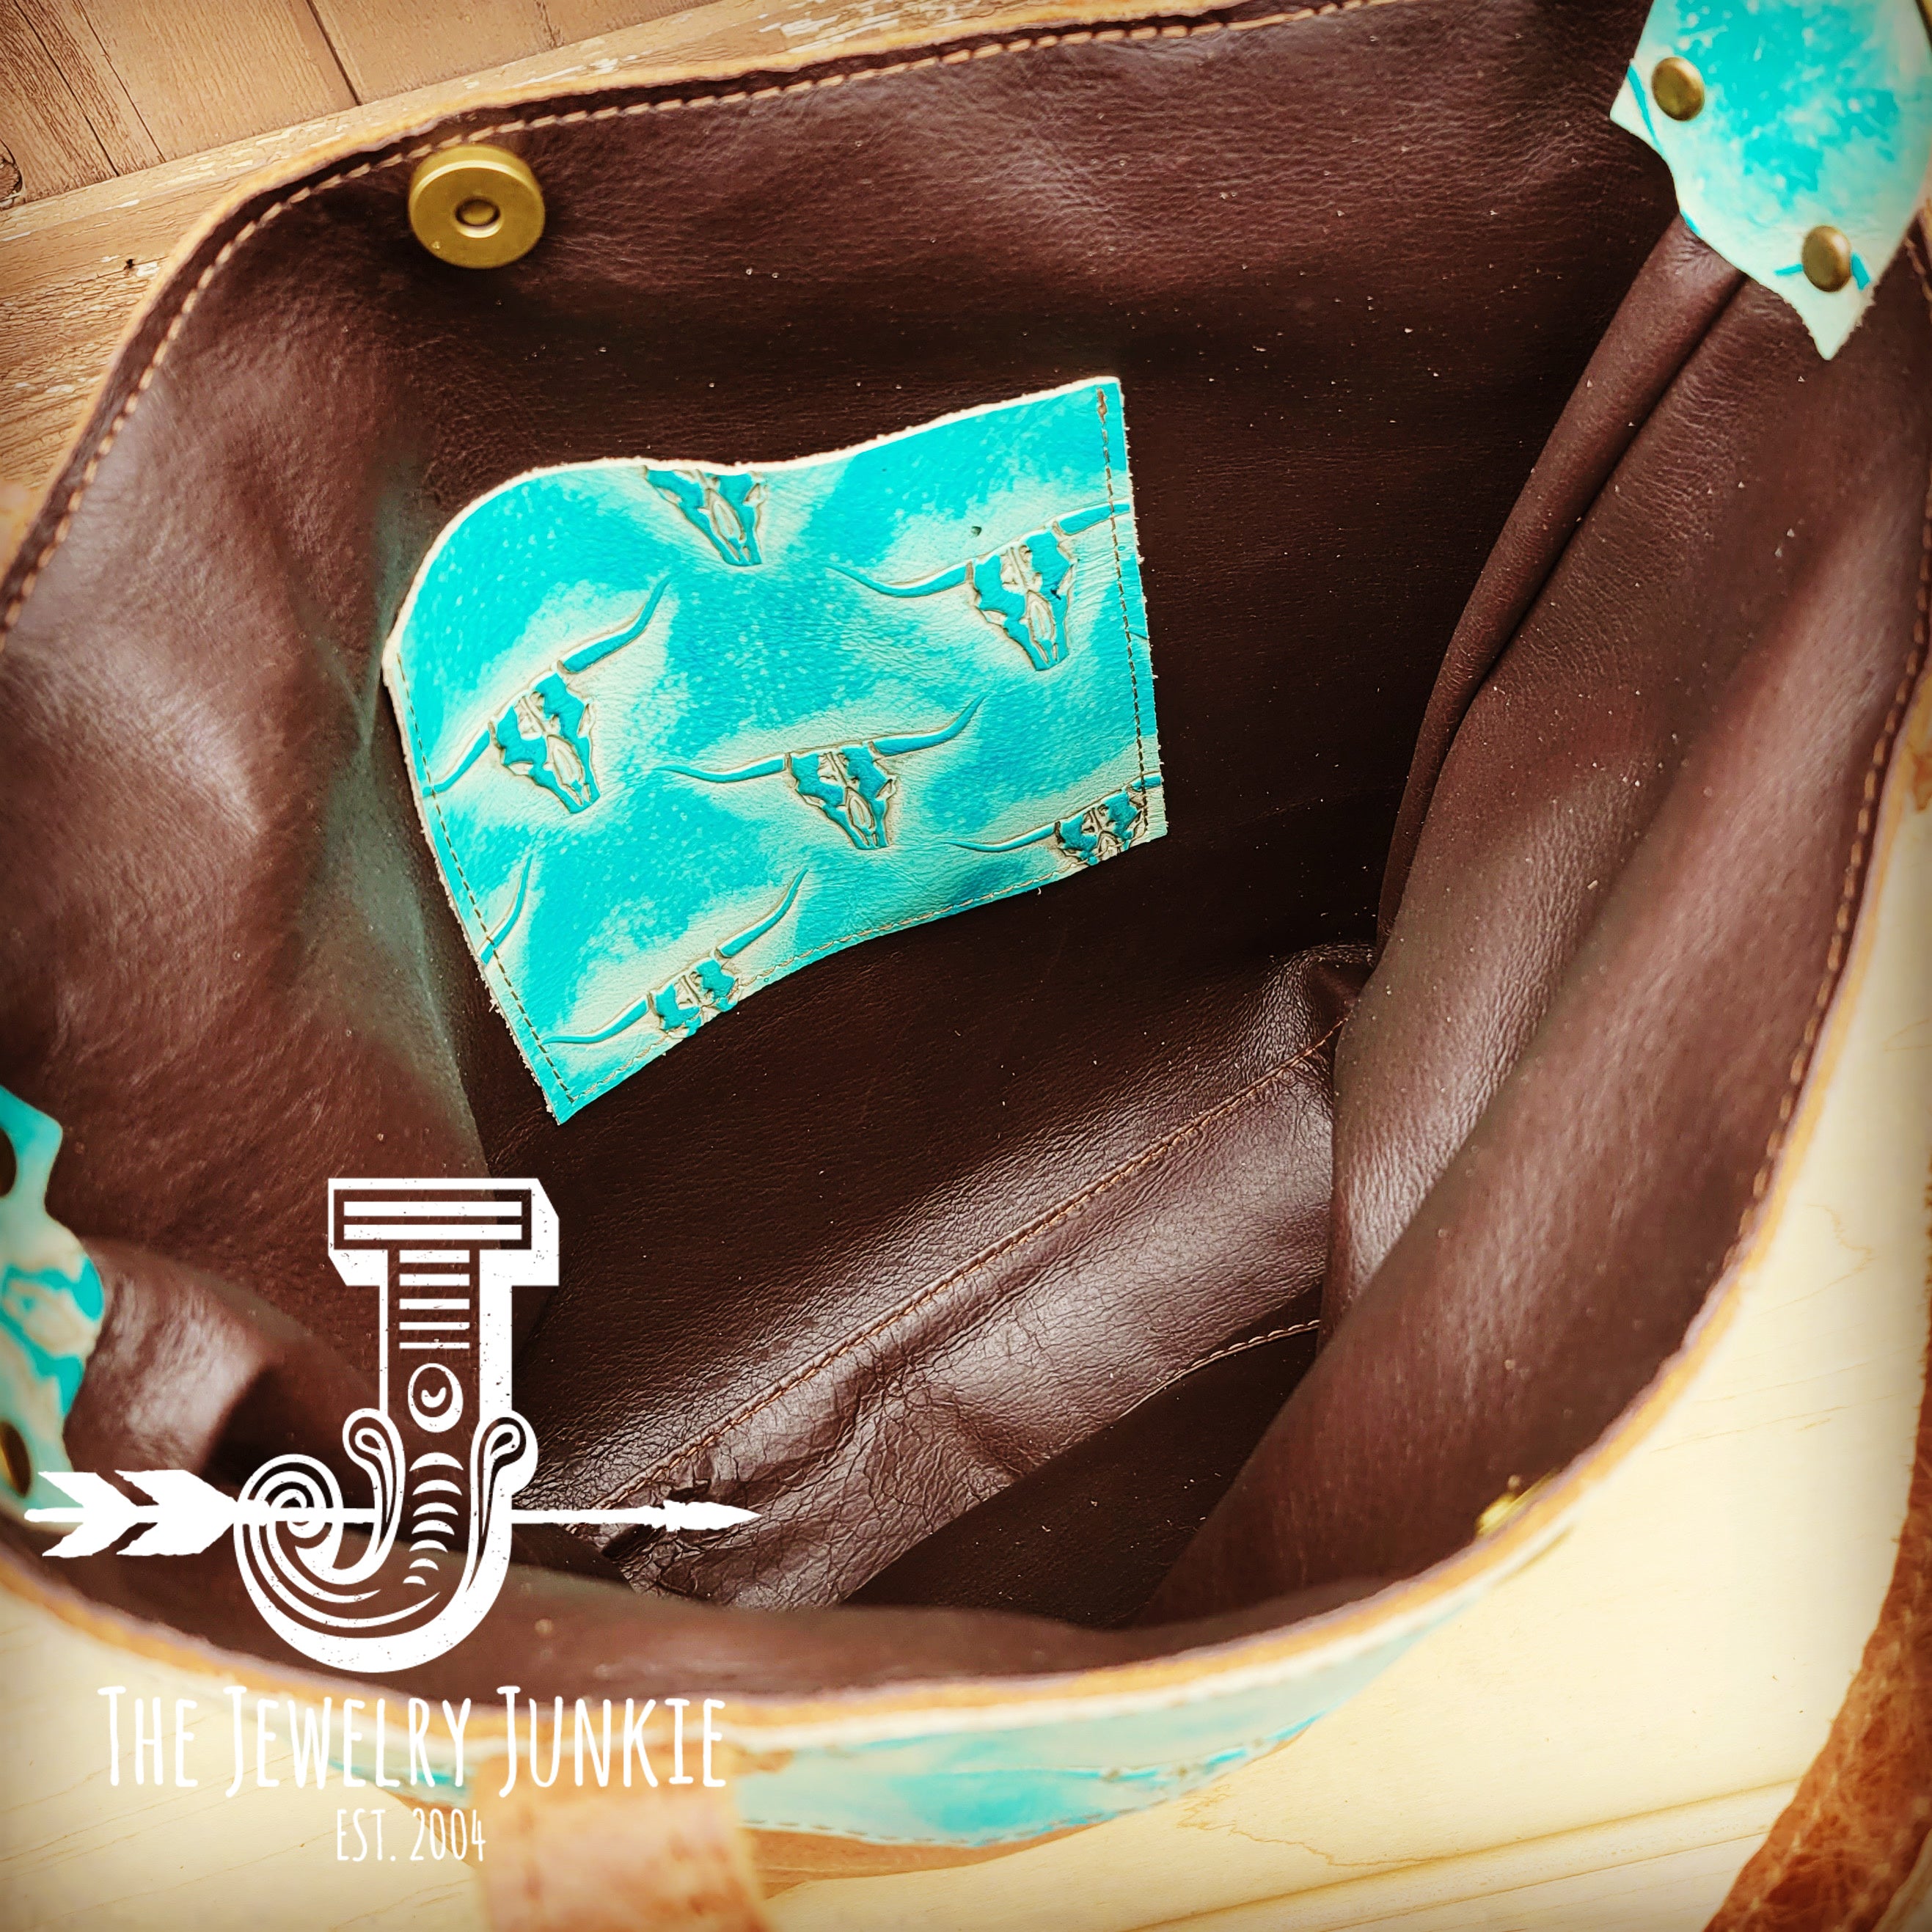 Jewelry Junkie Tejas Leather Bucket Handbag